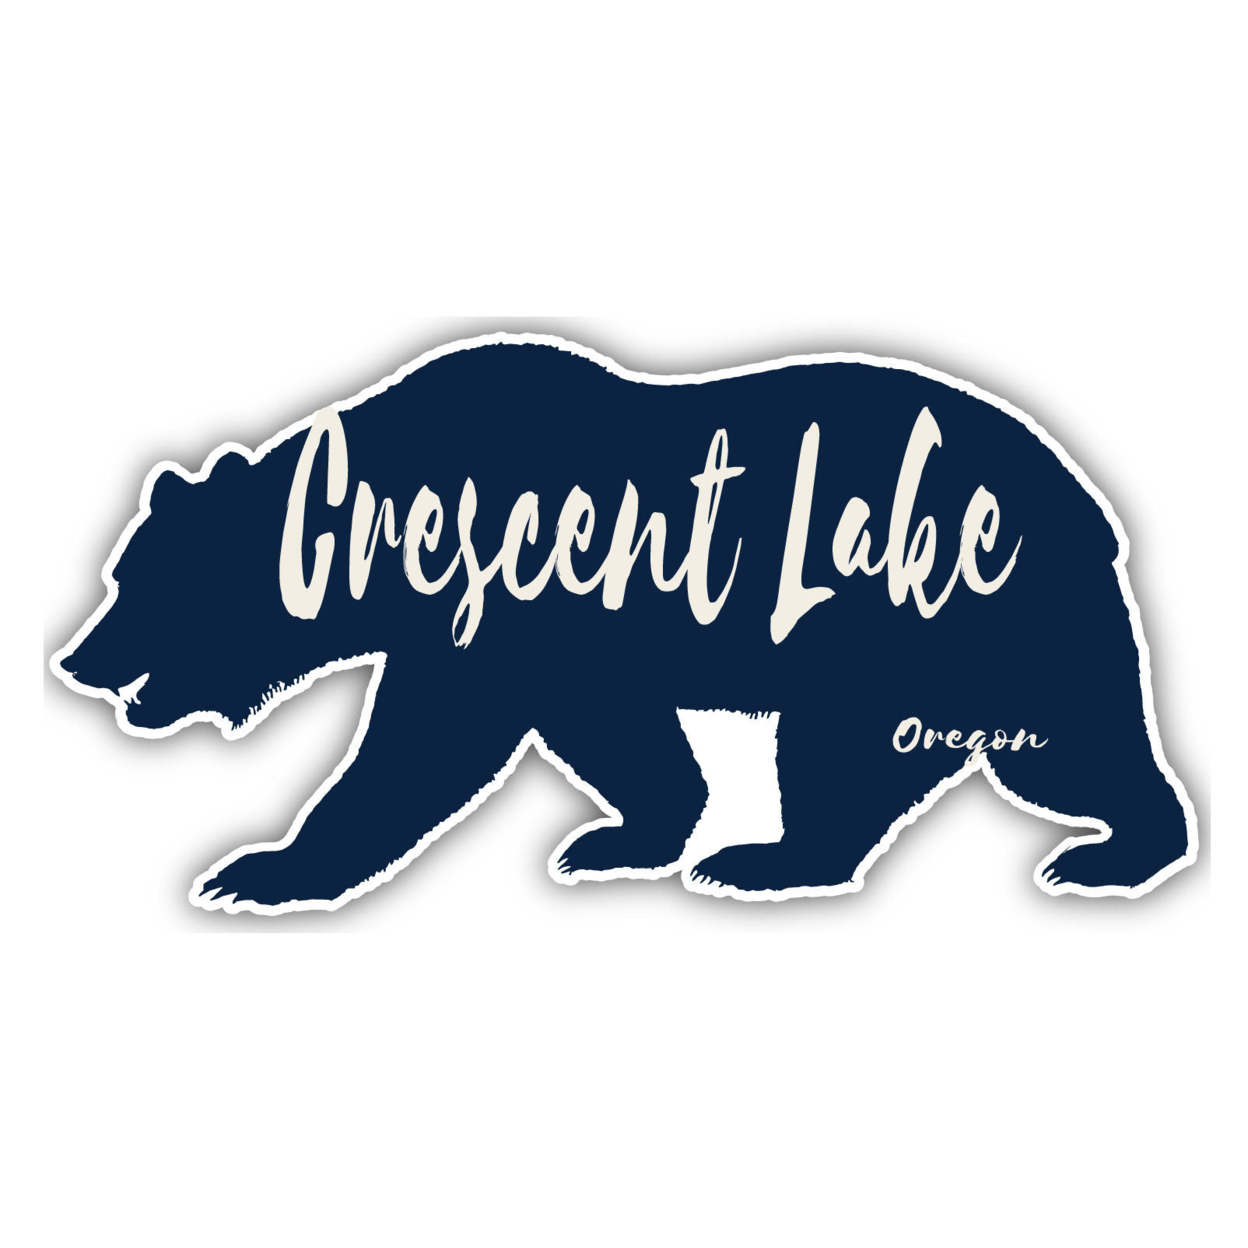 Crescent Lake Oregon Souvenir Decorative Stickers (Choose Theme And Size) - Single Unit, 12-Inch, Bear